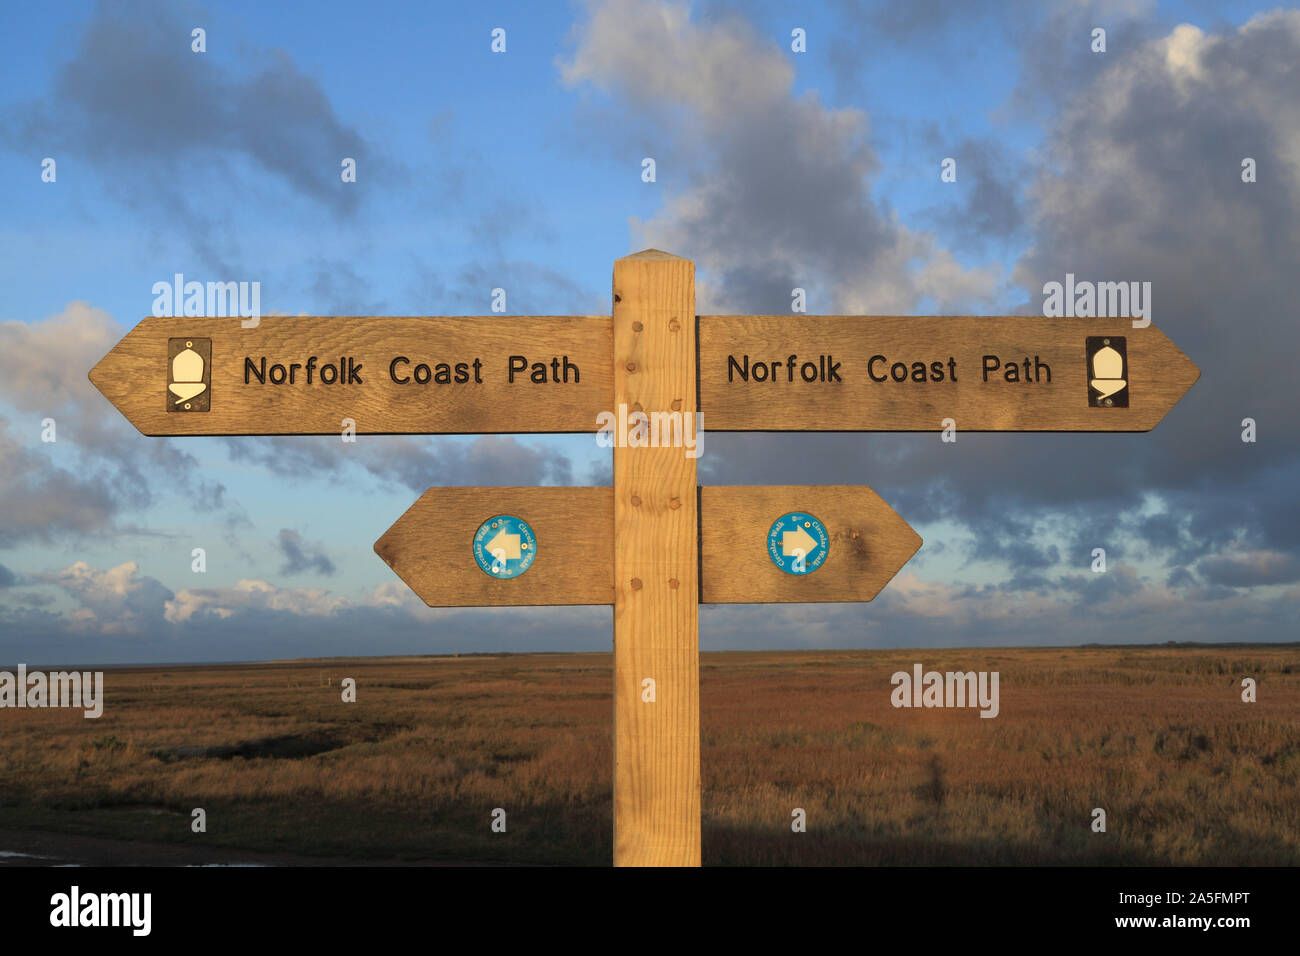 Norfolk Coast Path, finger post, direction, Circular Walks, Thornham, North Sea Coast, coastal, England,UK Stock Photo